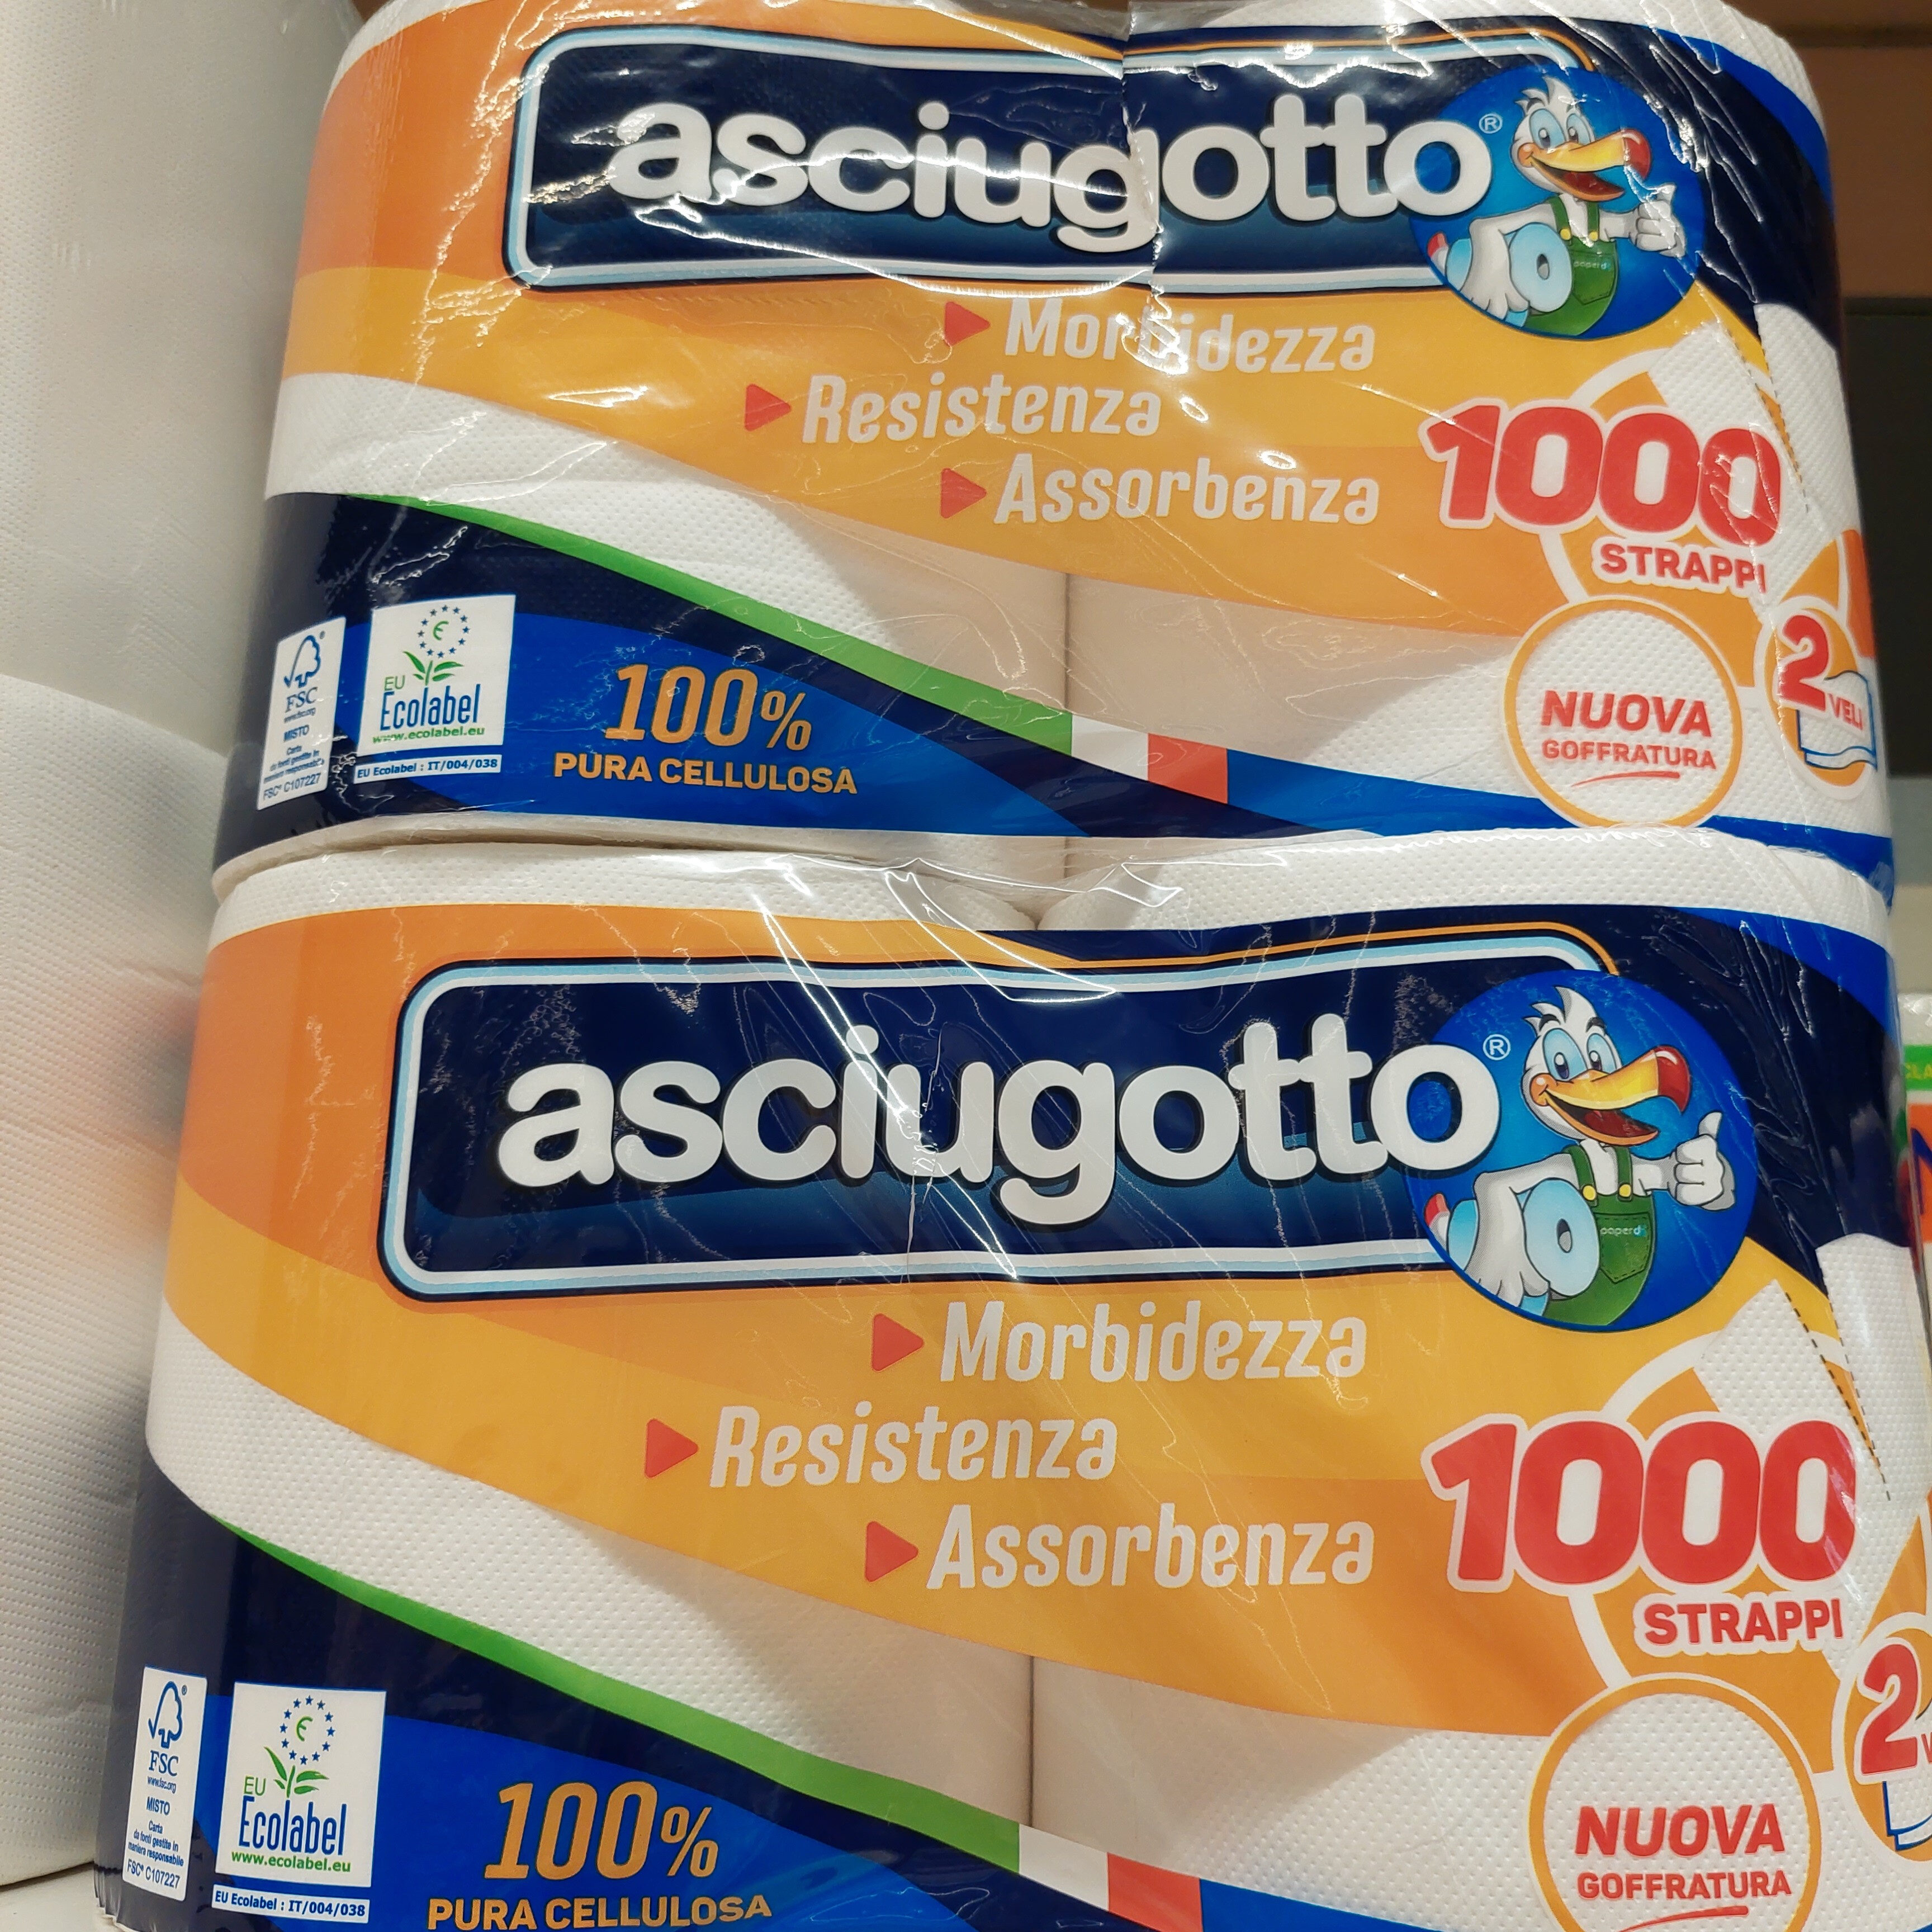 Asciugotto - Product - it